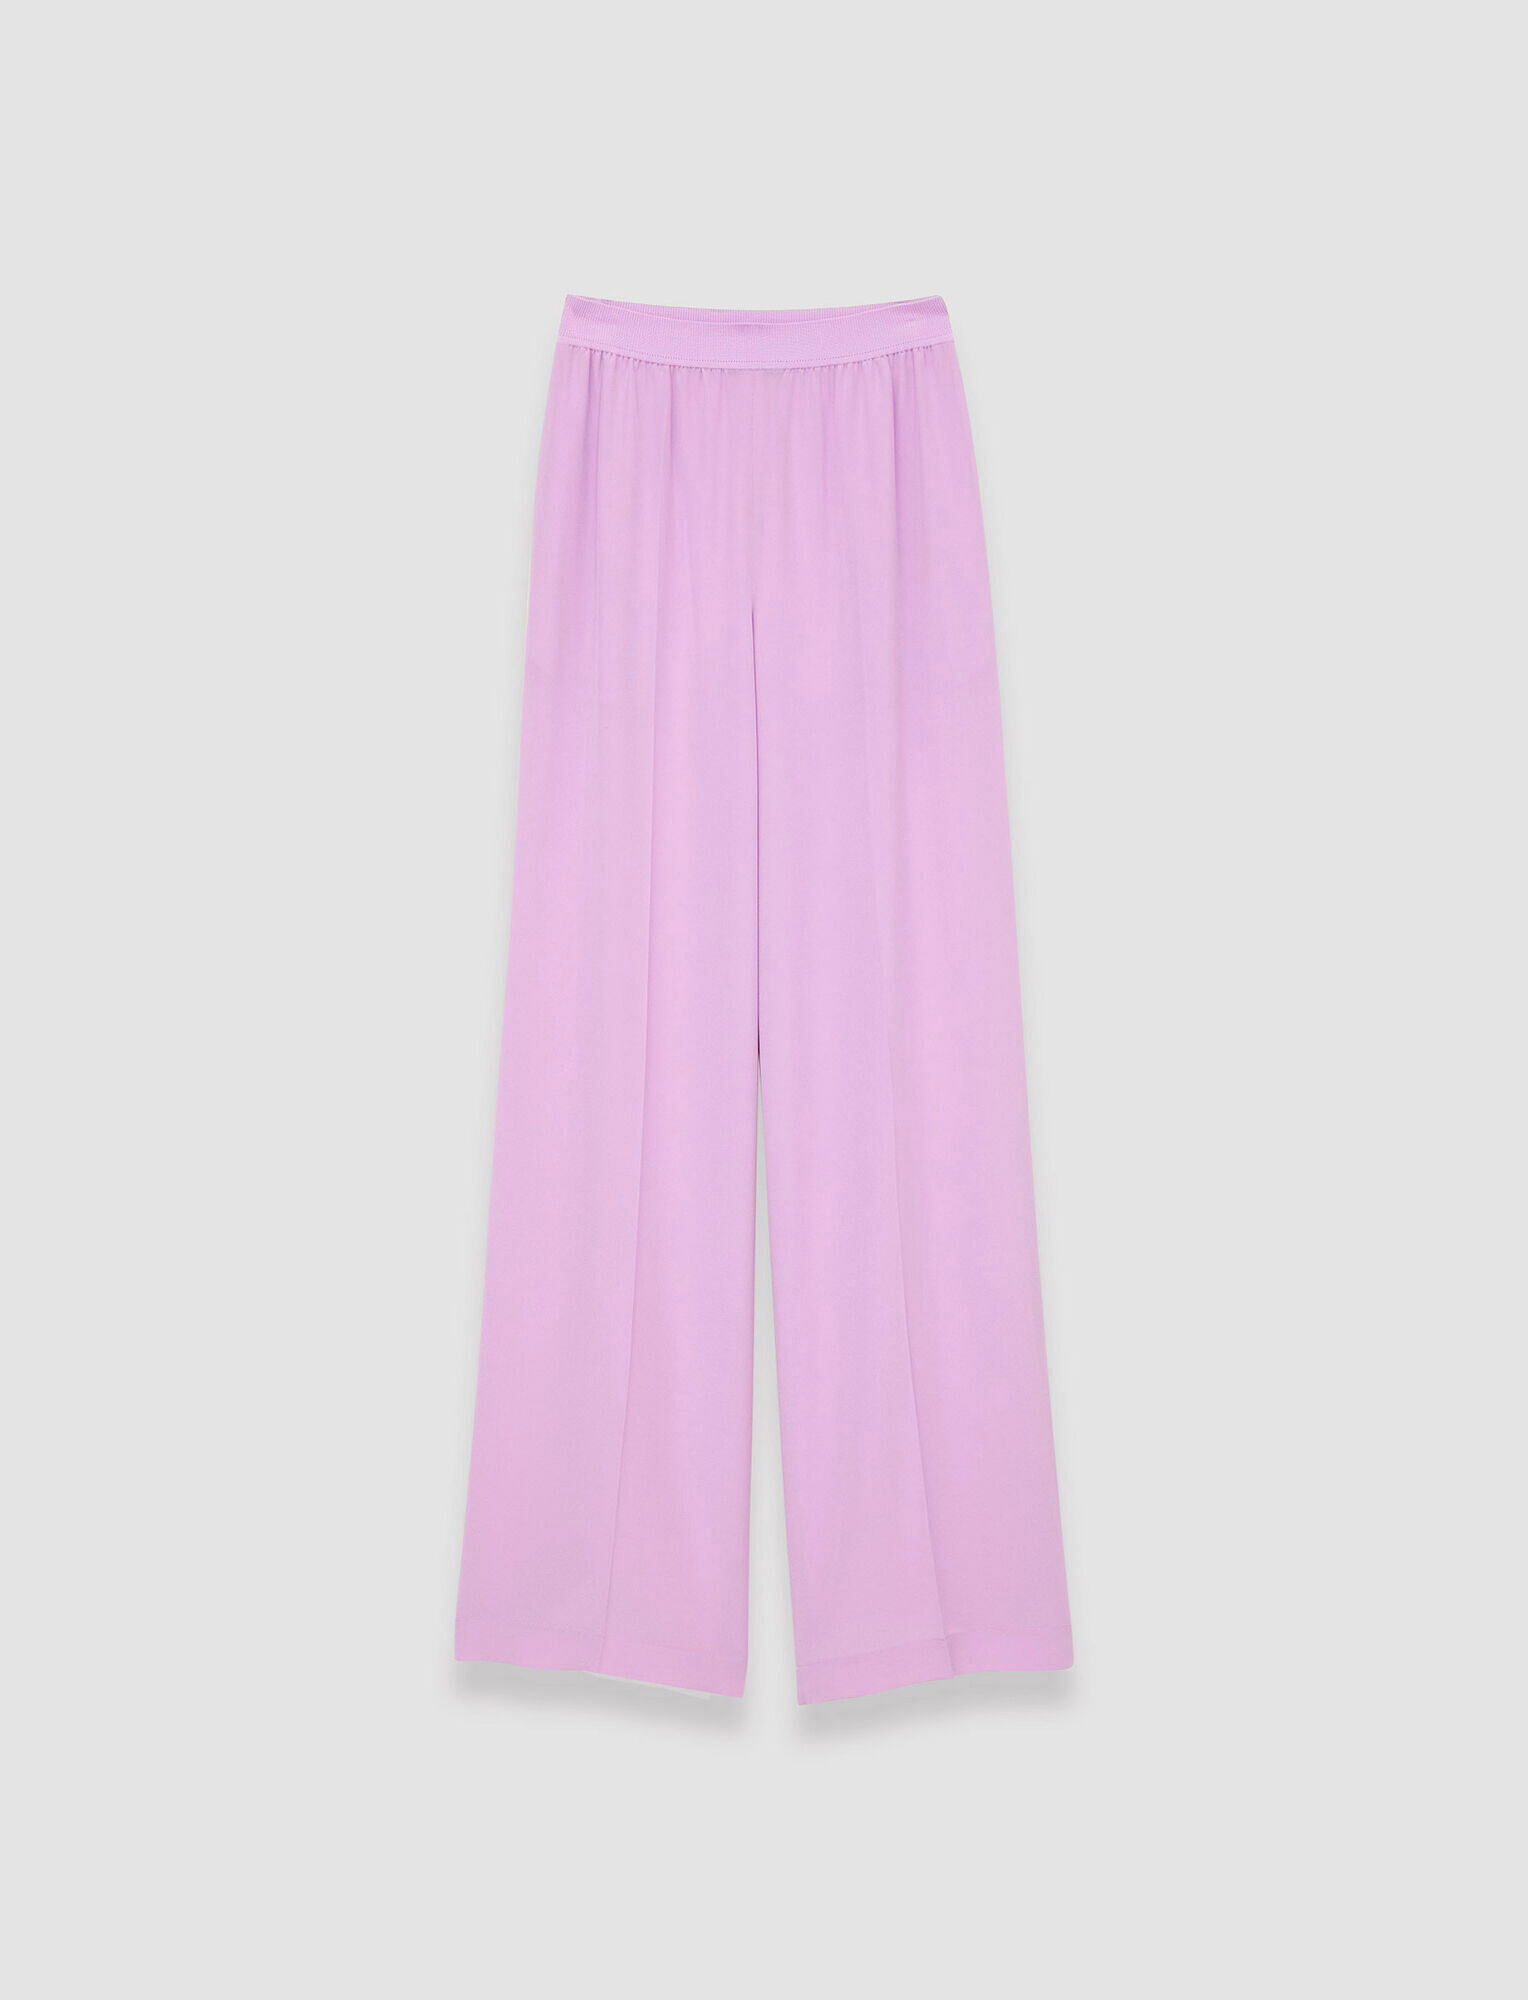 Joseph, Silk Crepe de Soie Hulin Trousers, in Begonia Pink